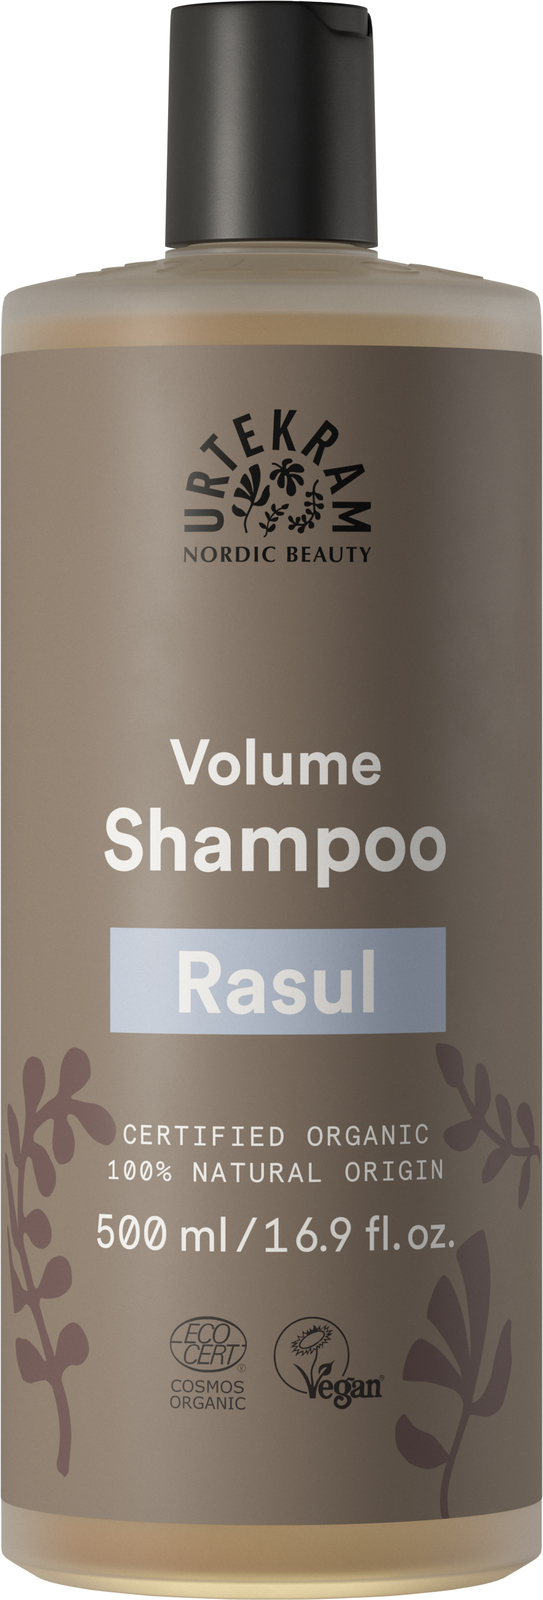 Urtekram Rasul Shampoo Volume kopen